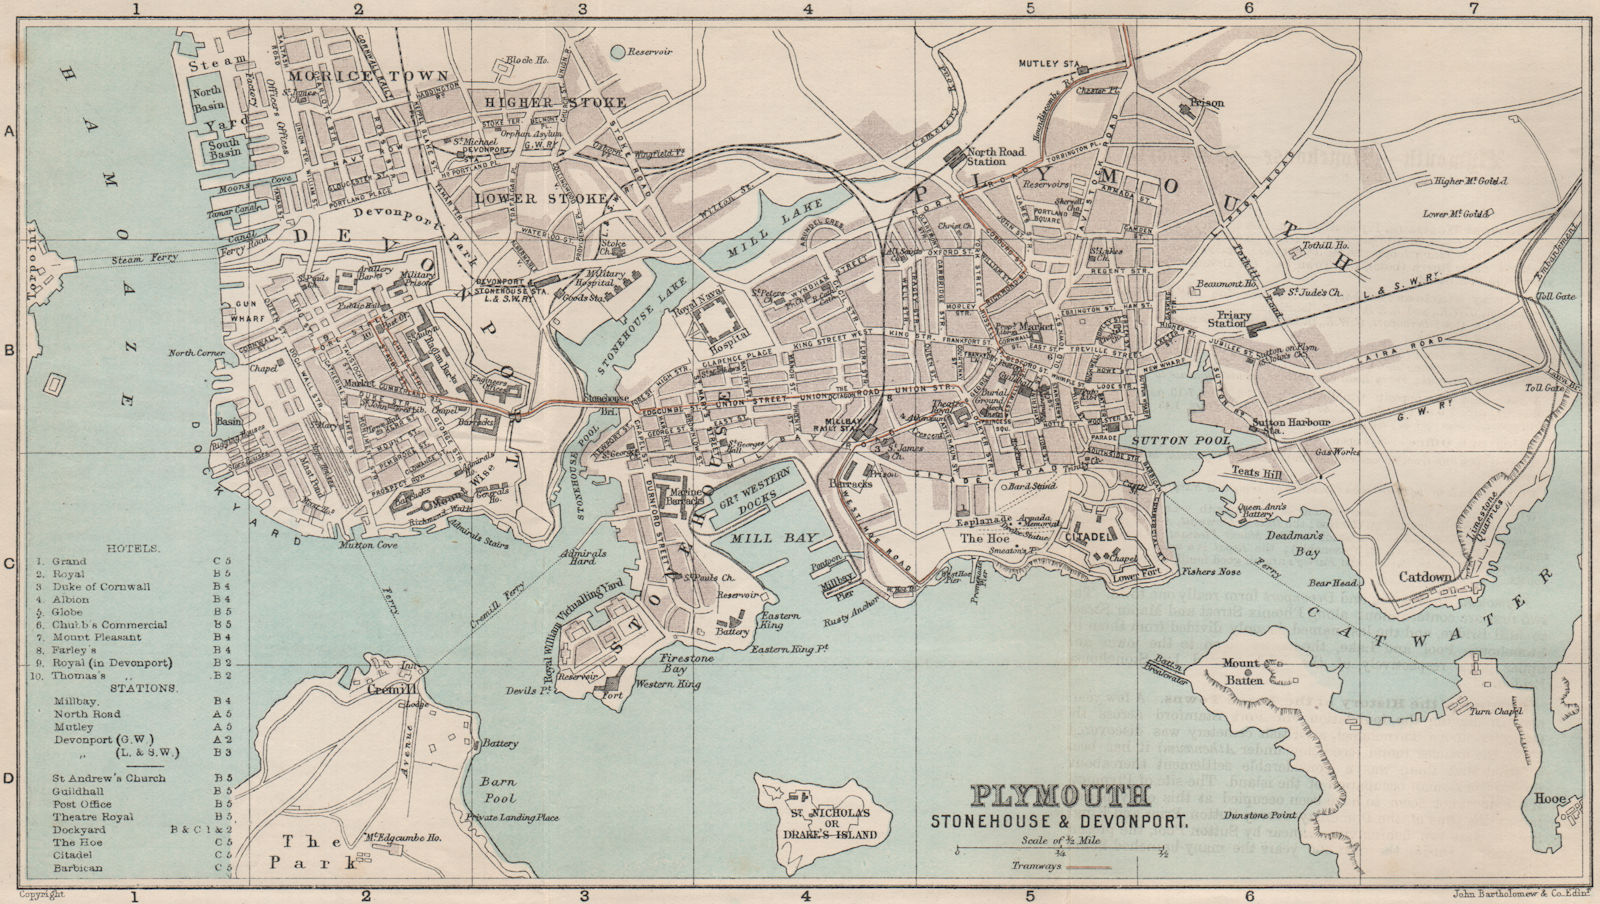 PLYMOUTH STONEHOUSE & DEVONPORT town/city plan. BARTHOLOMEW 1889 old map